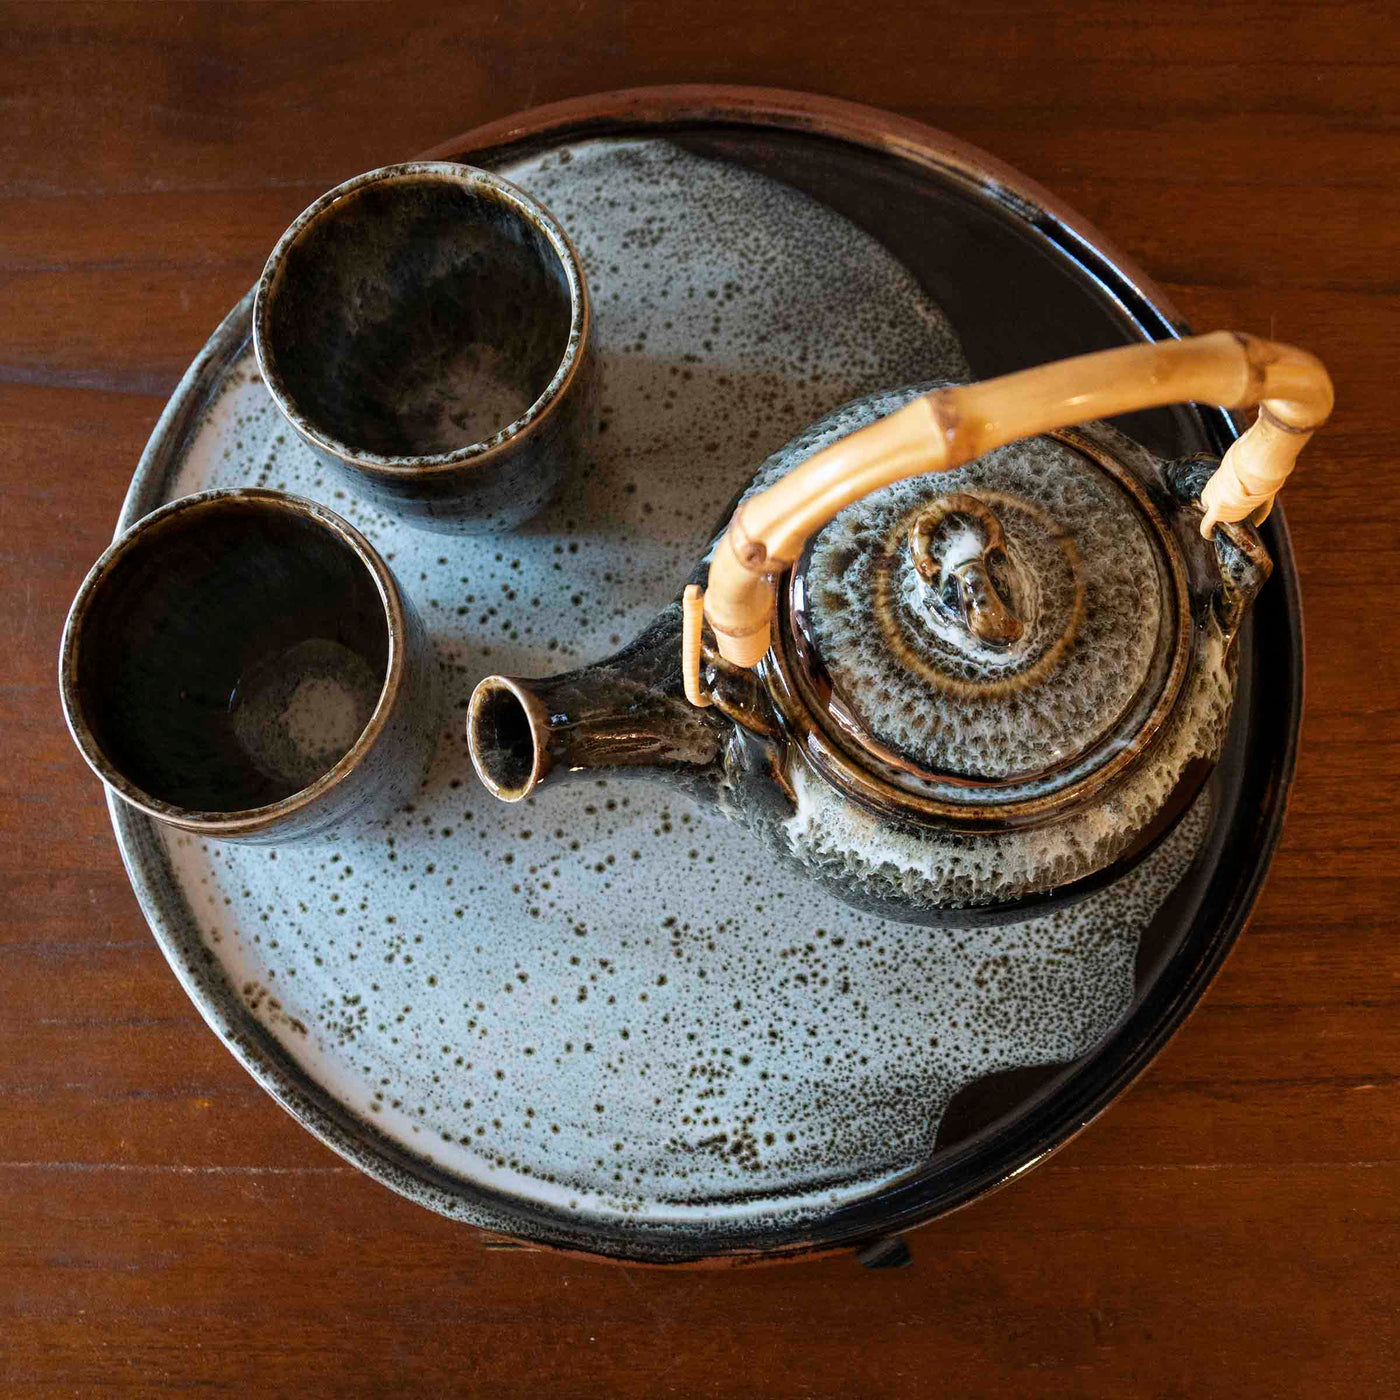 Tea Pot wood kiln